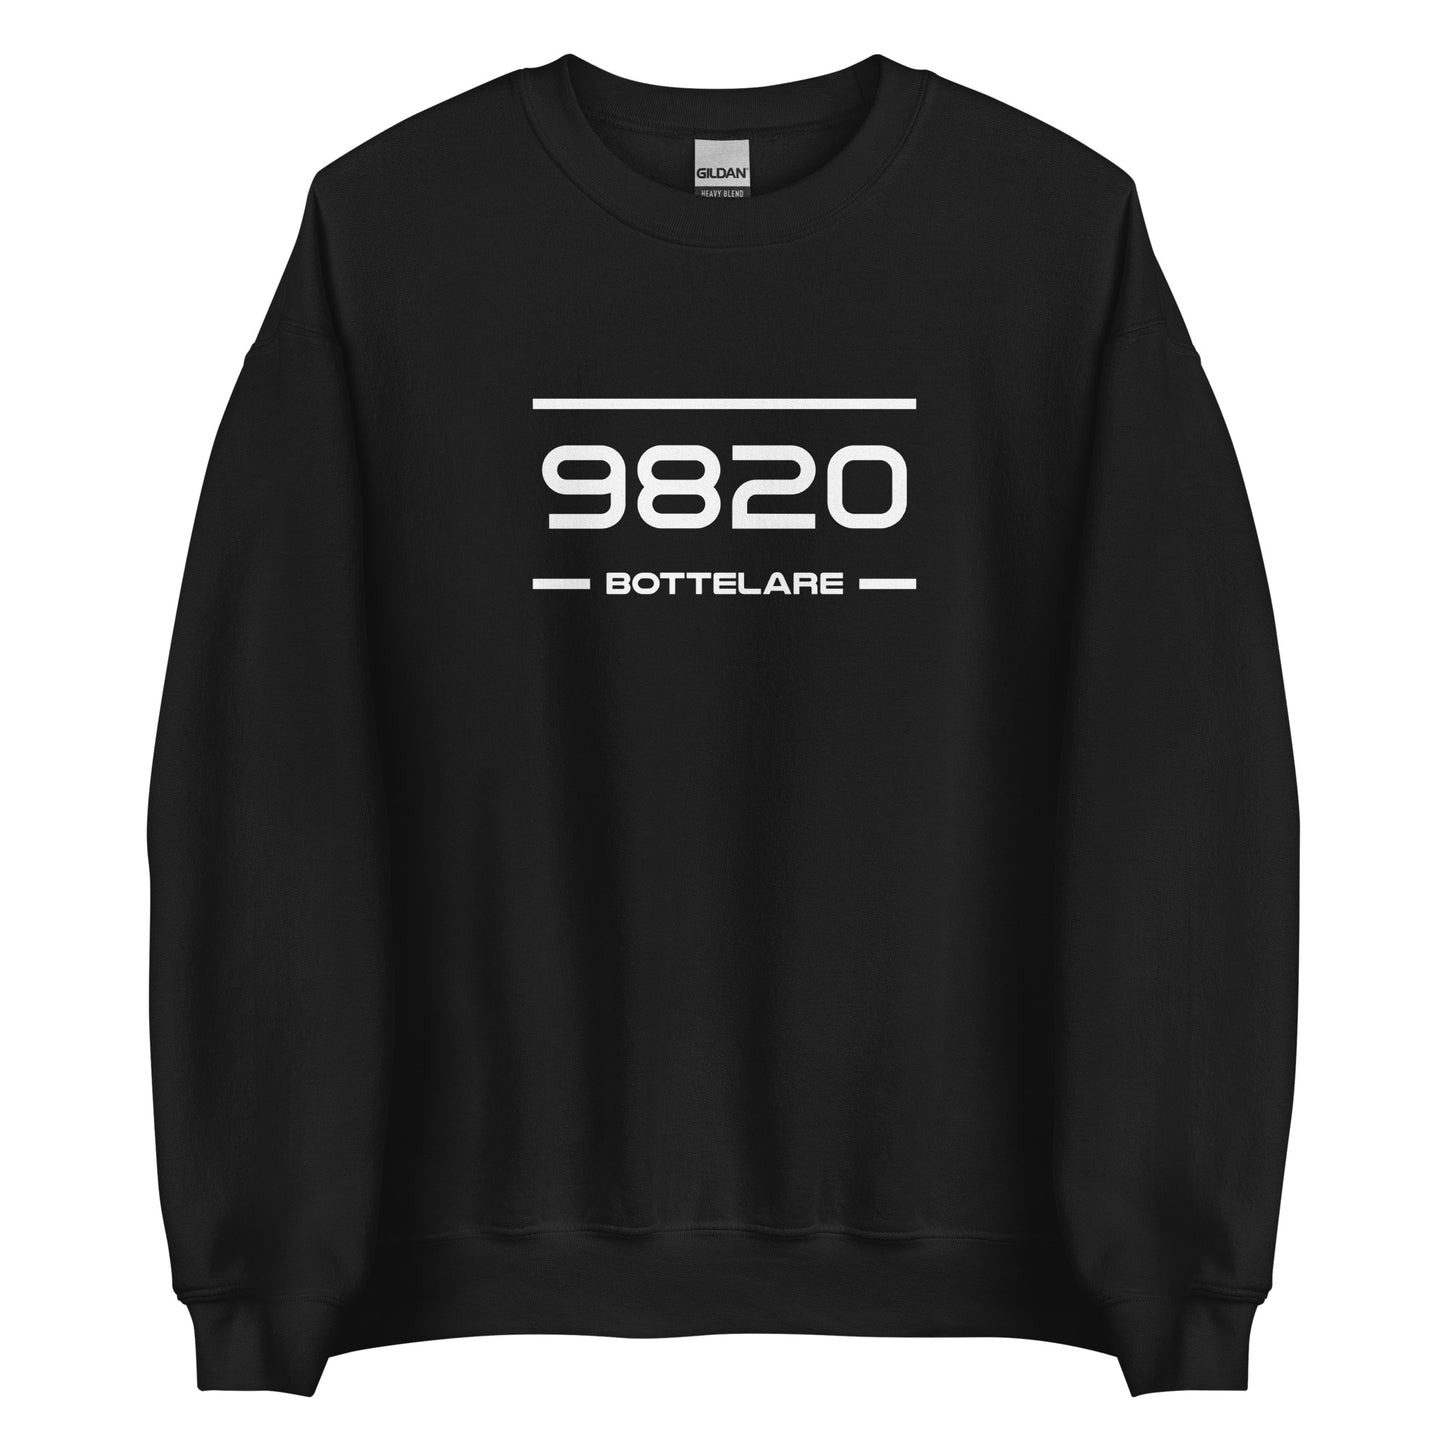 Sweater - 9820 - Bottelare (M/V)